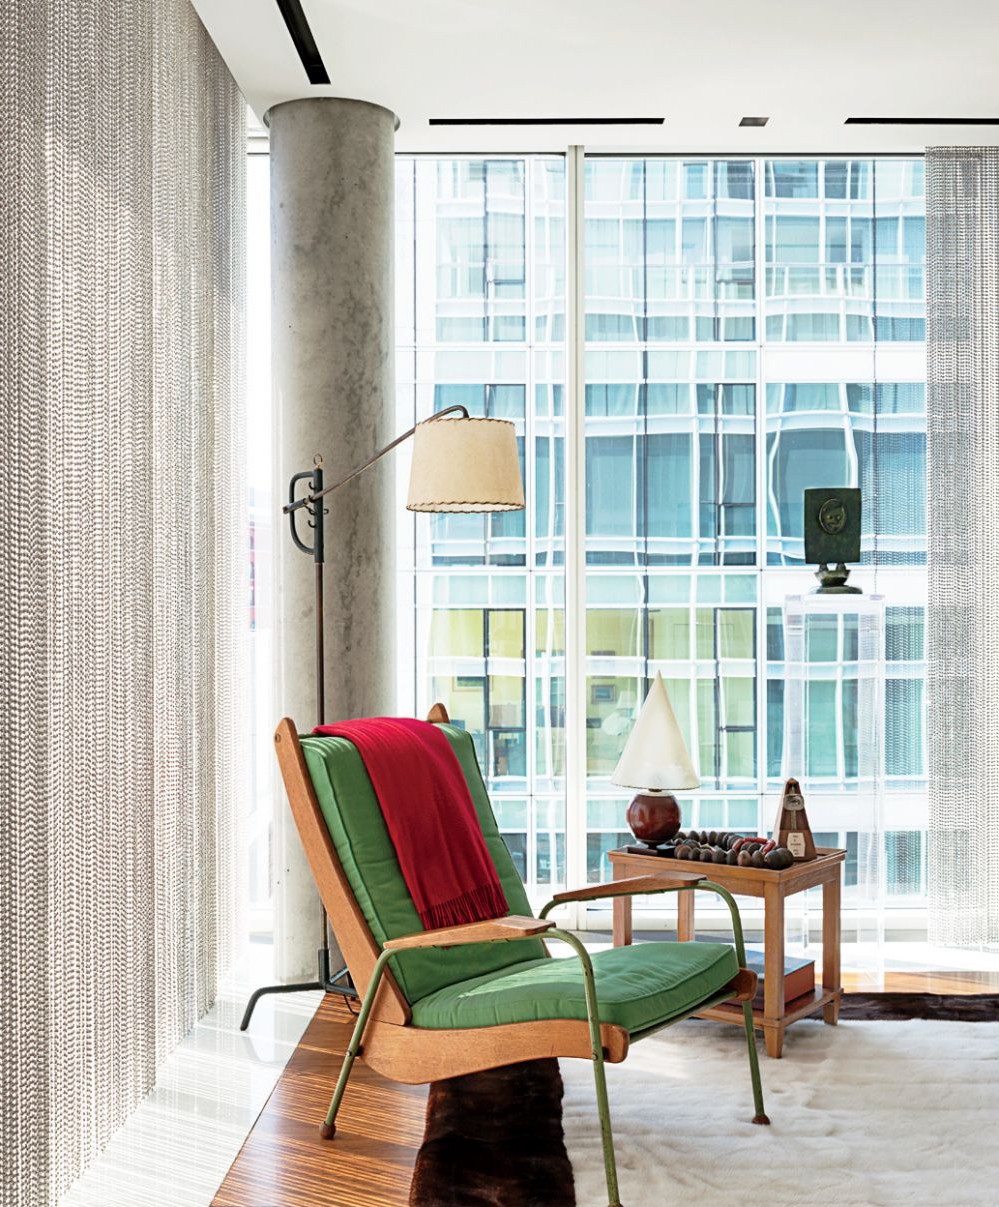 preston phillips interior design reading chaise floor lamp rug green upholstery curtains